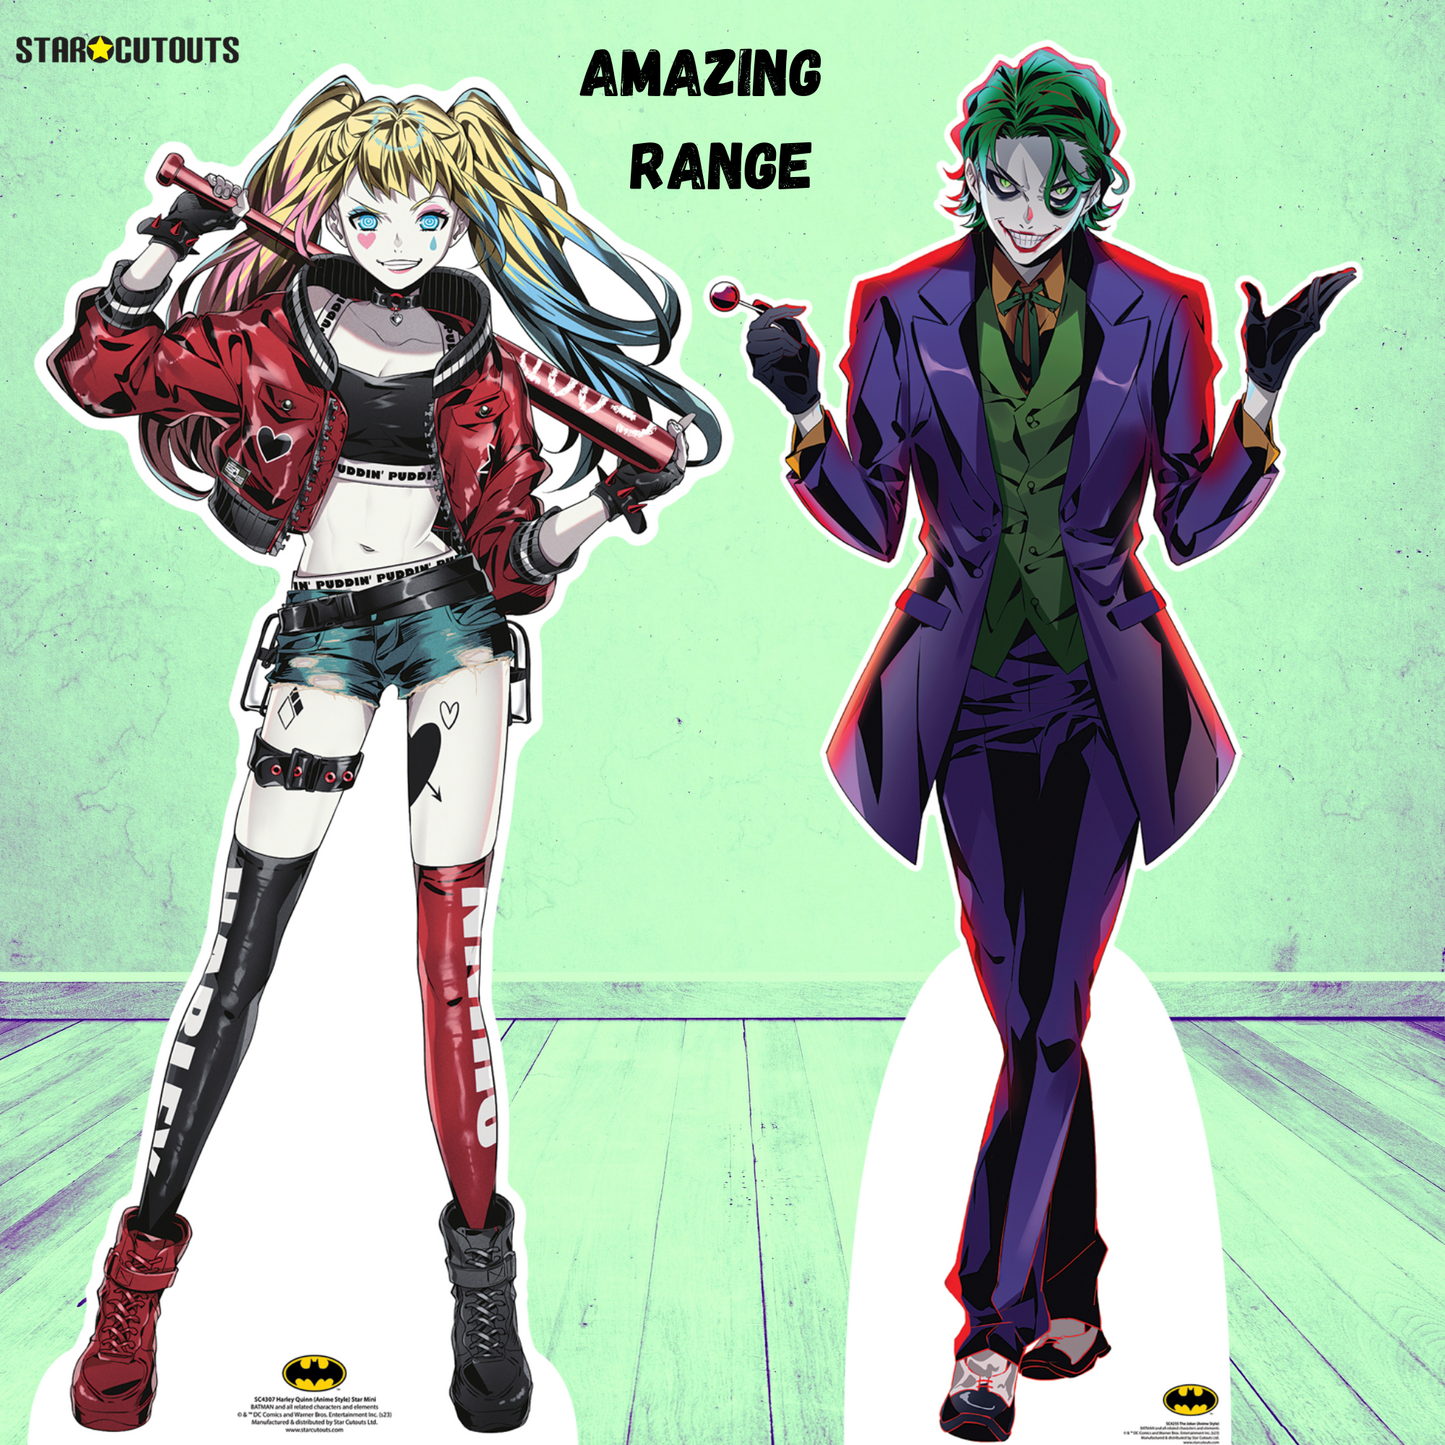 The Joker Anime Style Cardboard Cutout